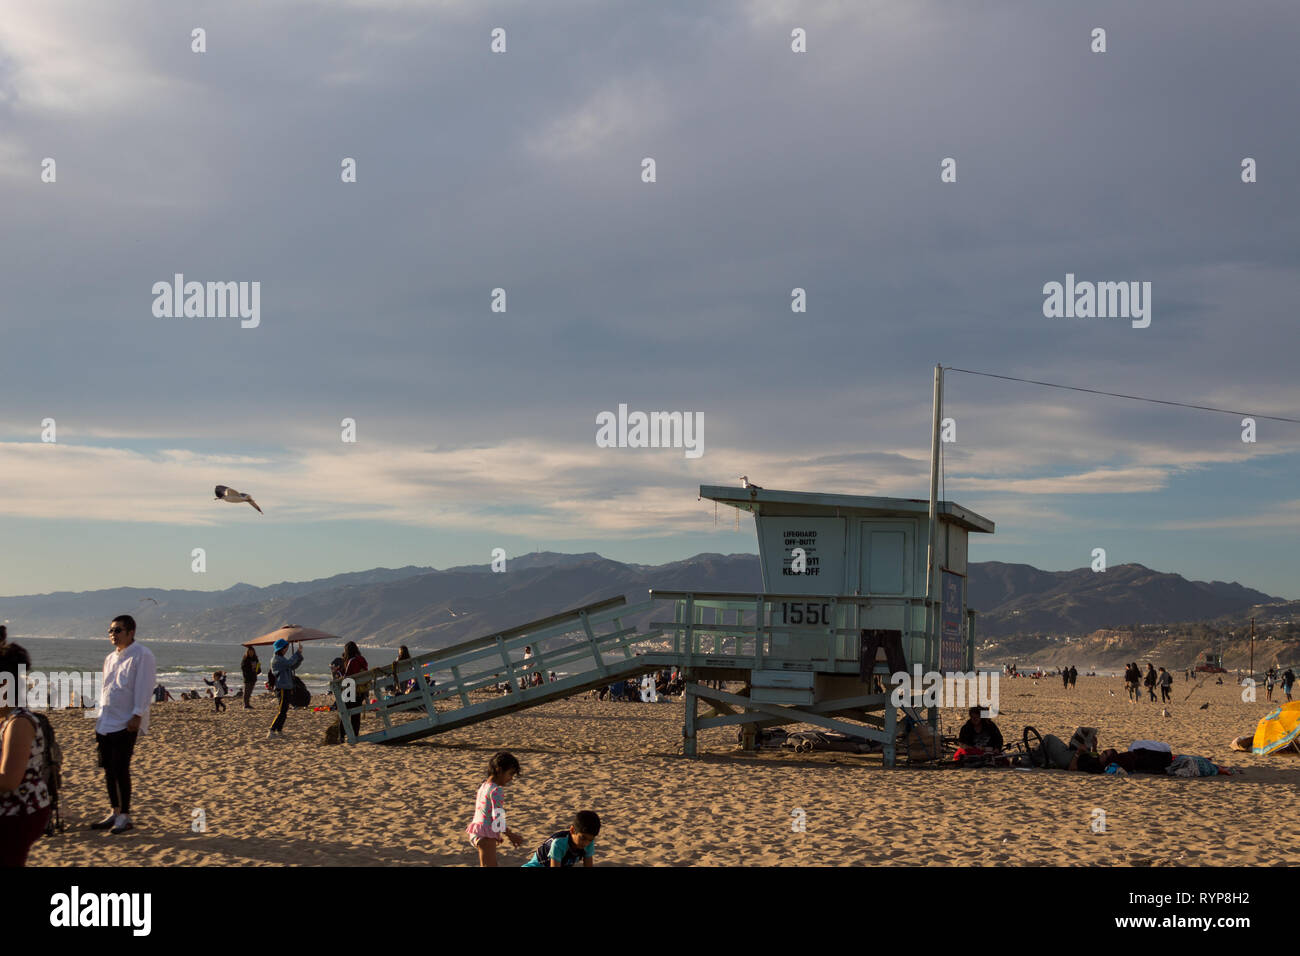 Image of people enjoying Santa Monica Beach in Los Angeles. Stock Photo